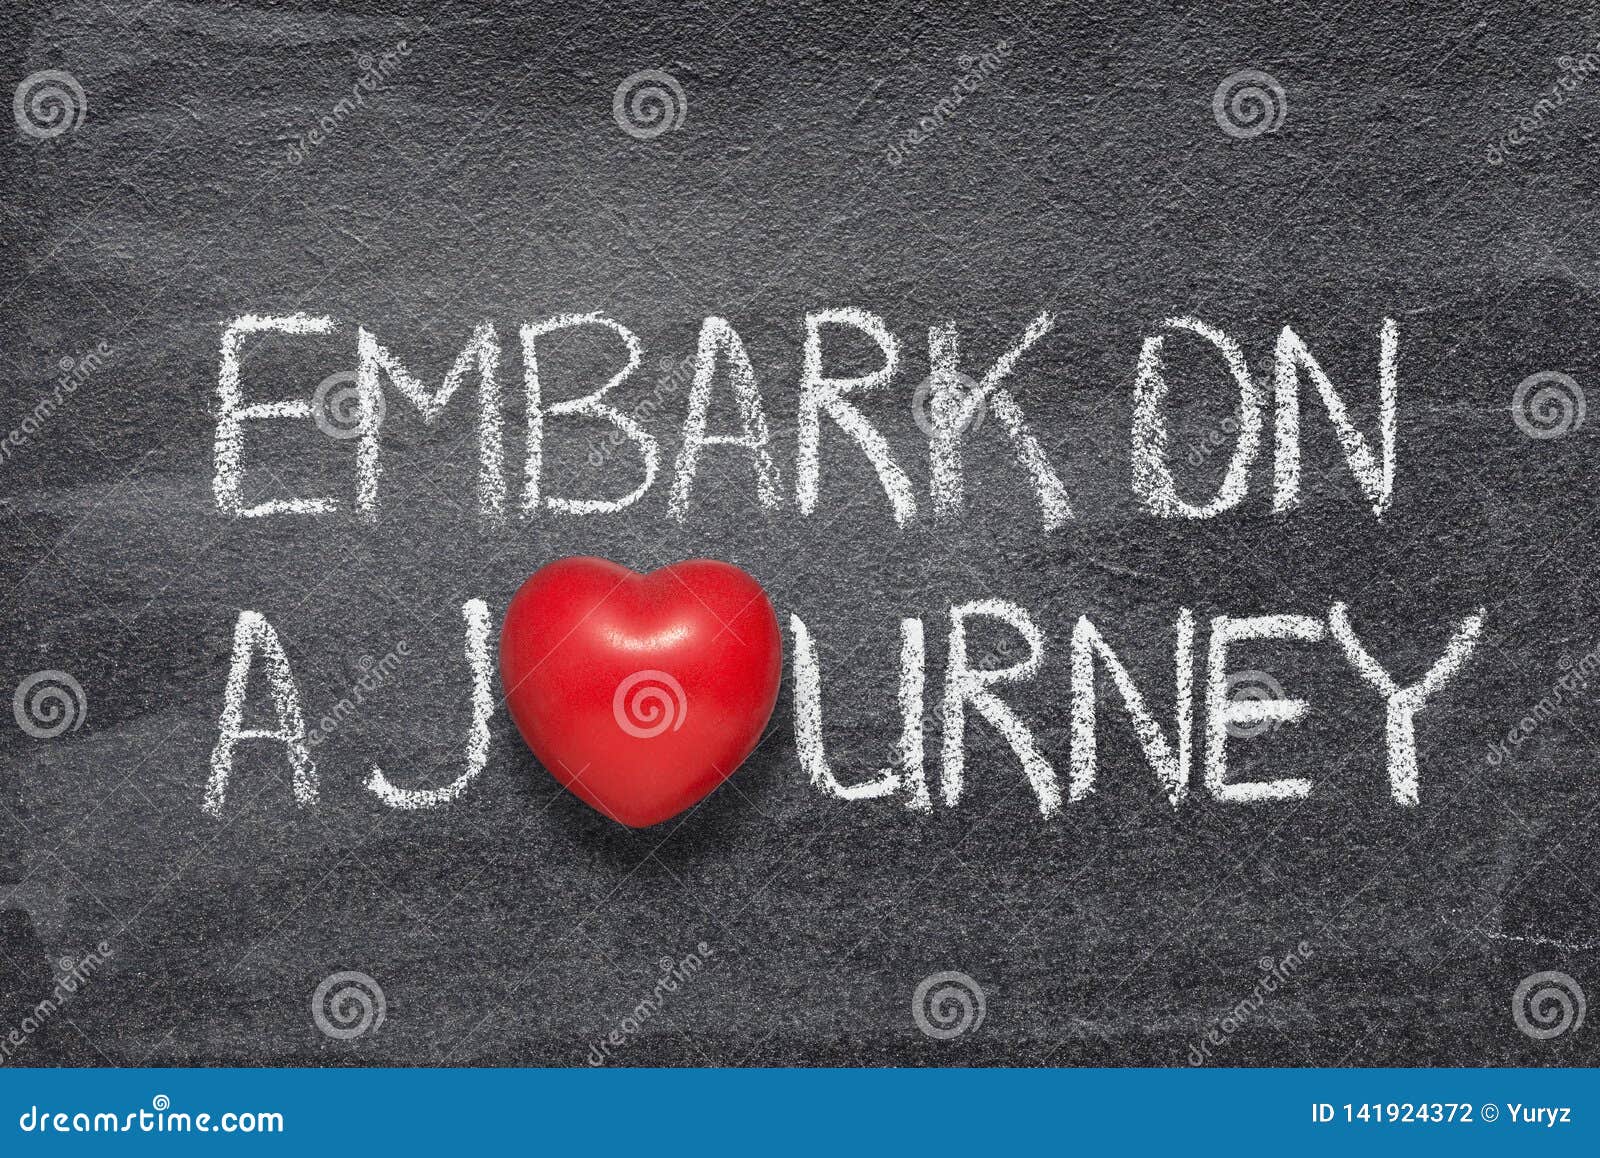 embark on journey heart